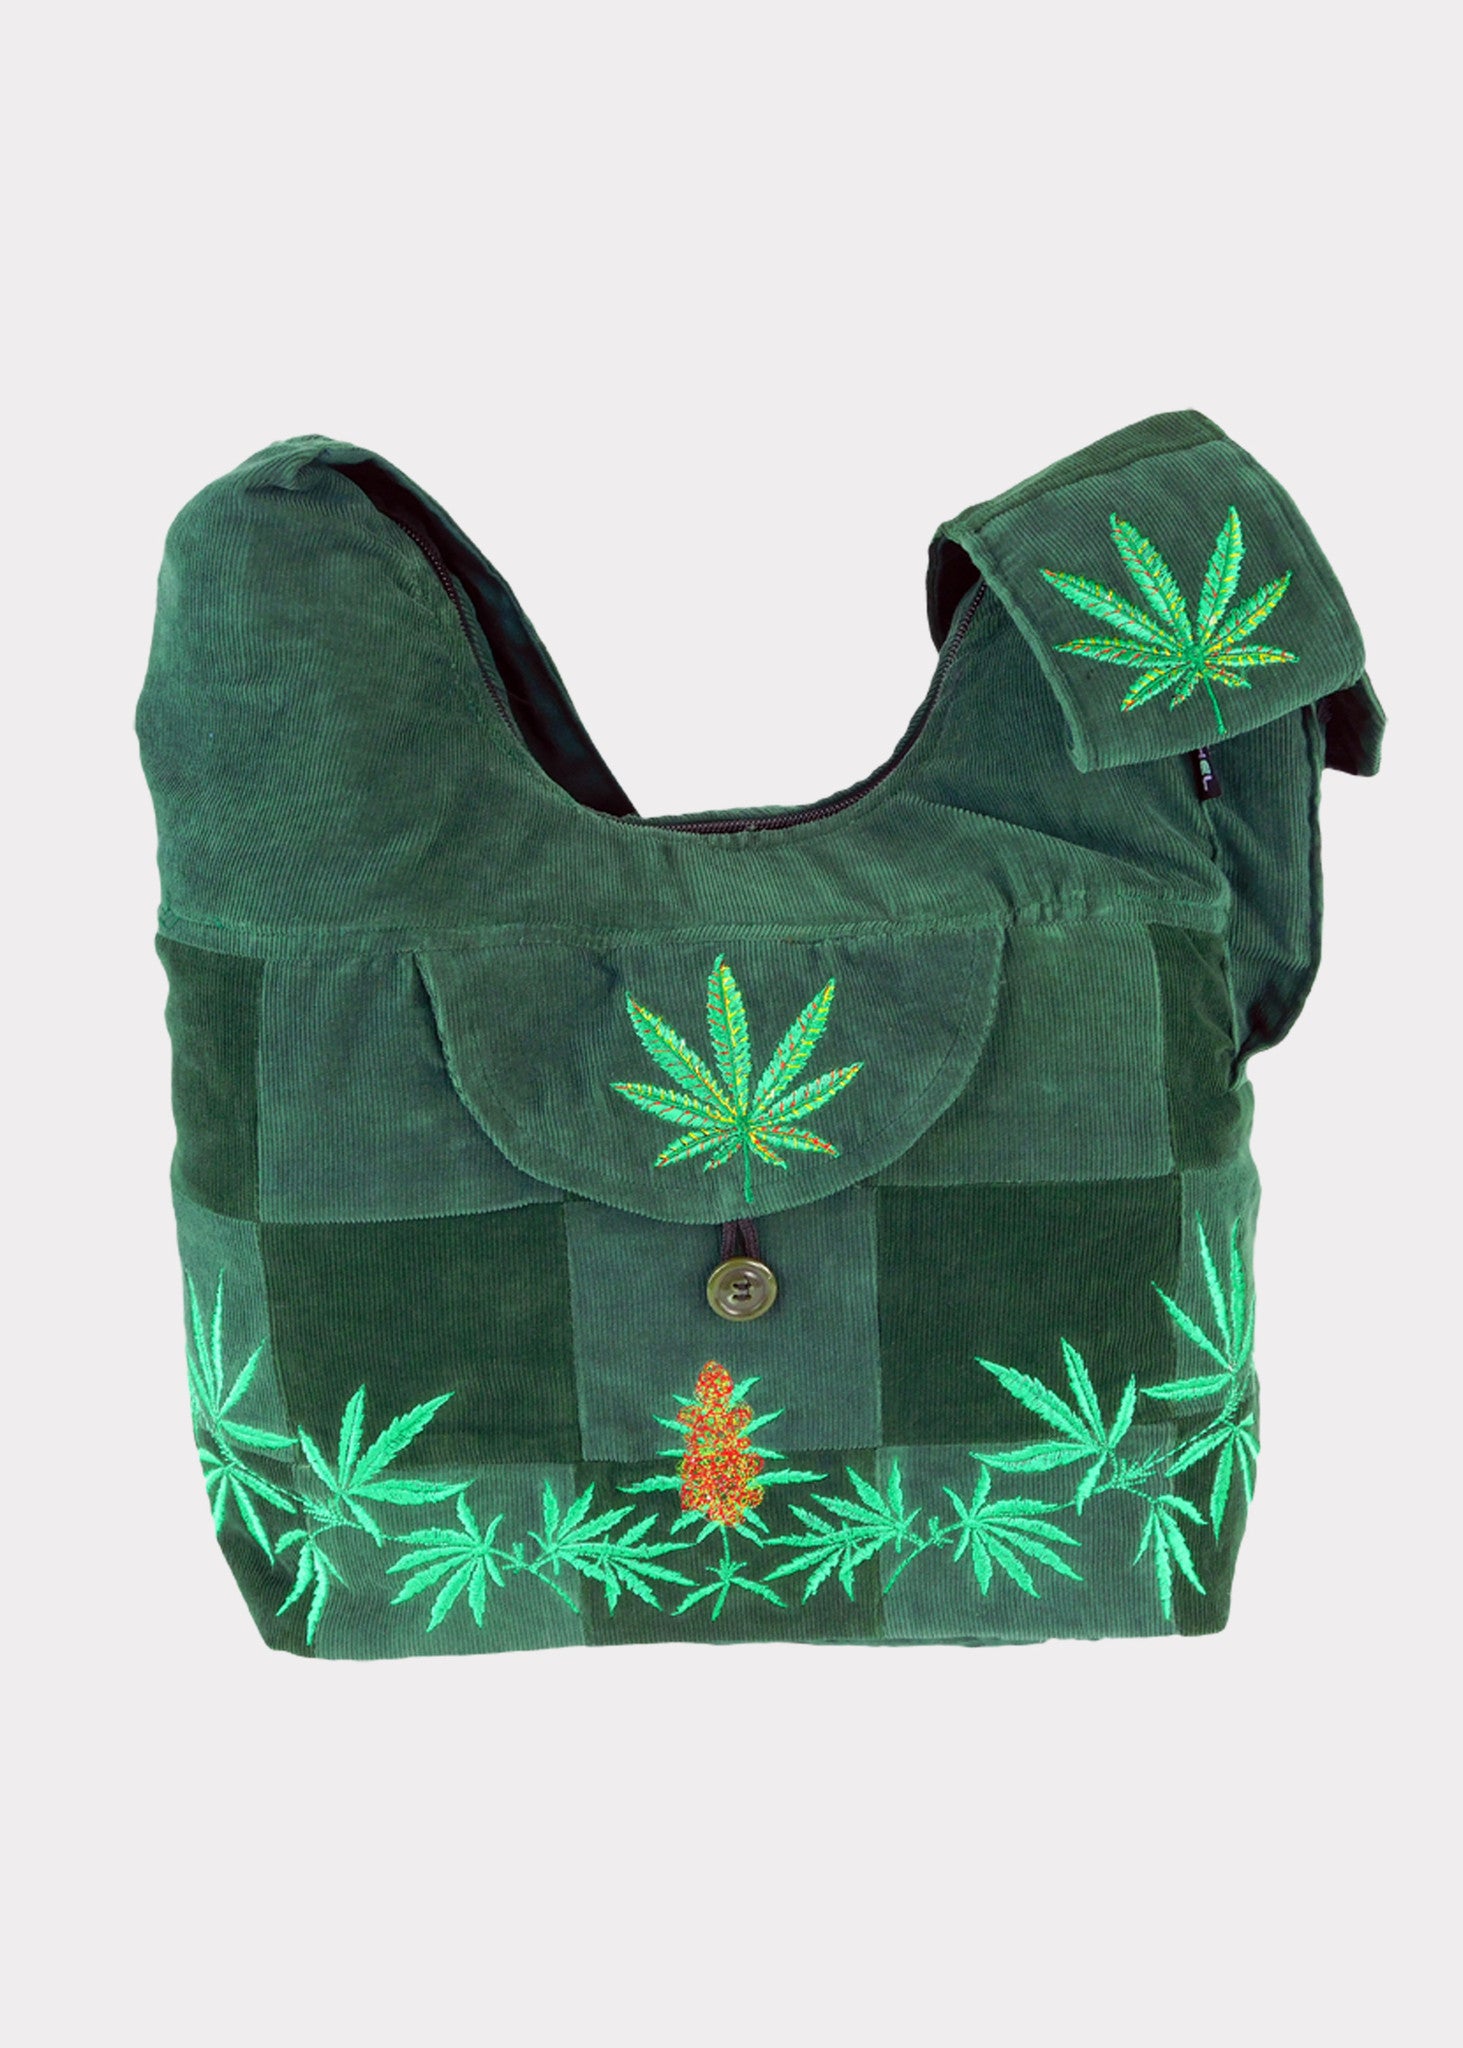 Hemp Purse Bags - Linden Leaf Gifts